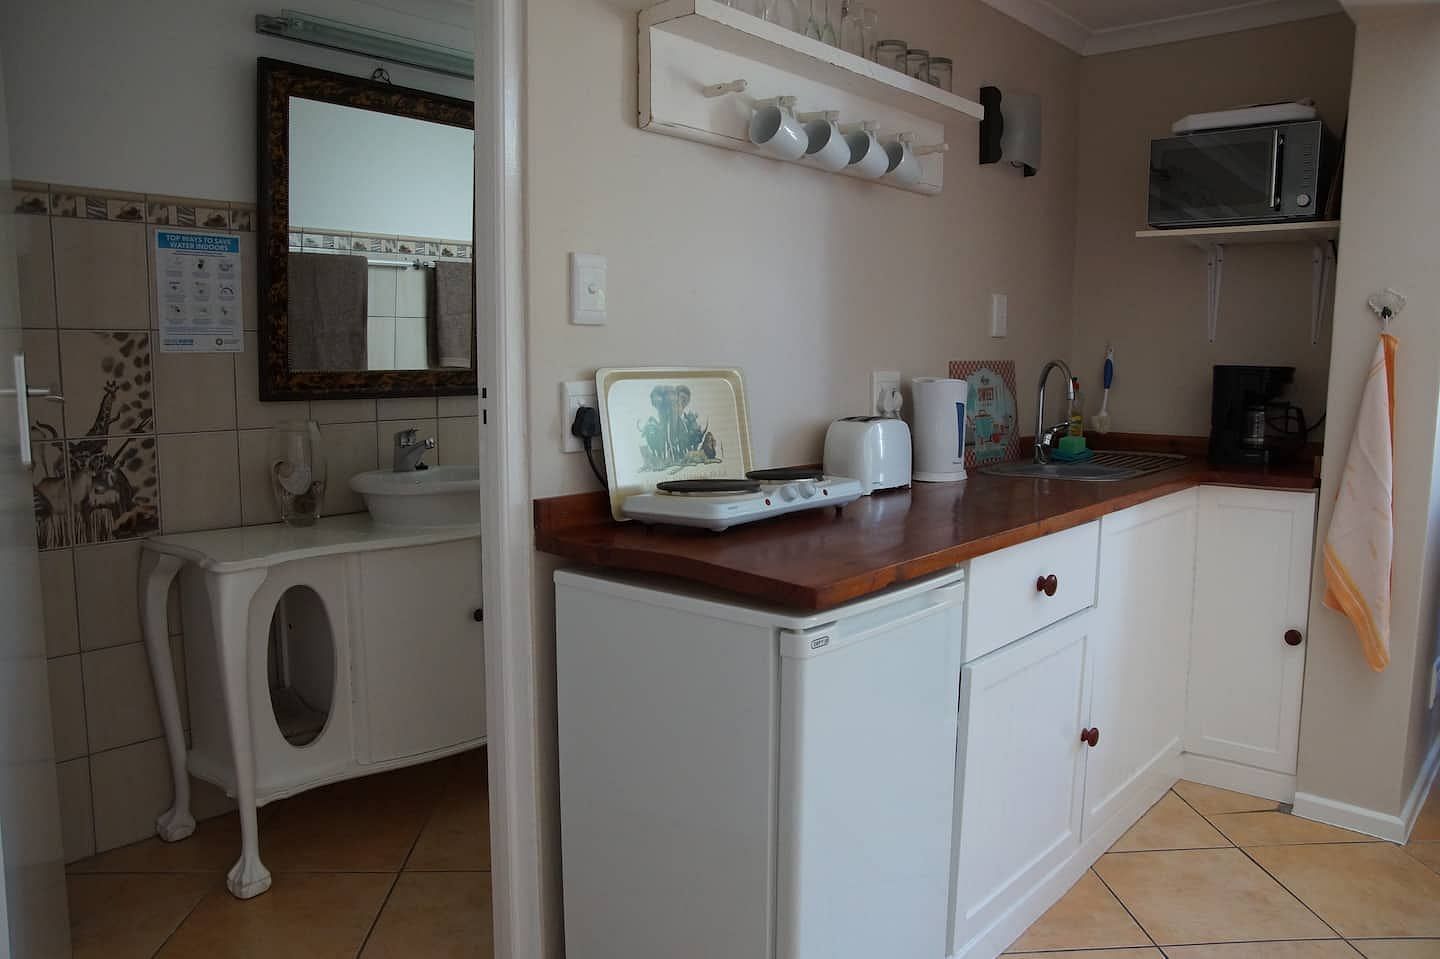 JWguest Residential Home at Cape Town, Western Cape | Wonderful Studio Apartment between 2 Oceans #2 | Jwbnb no brobnb 12